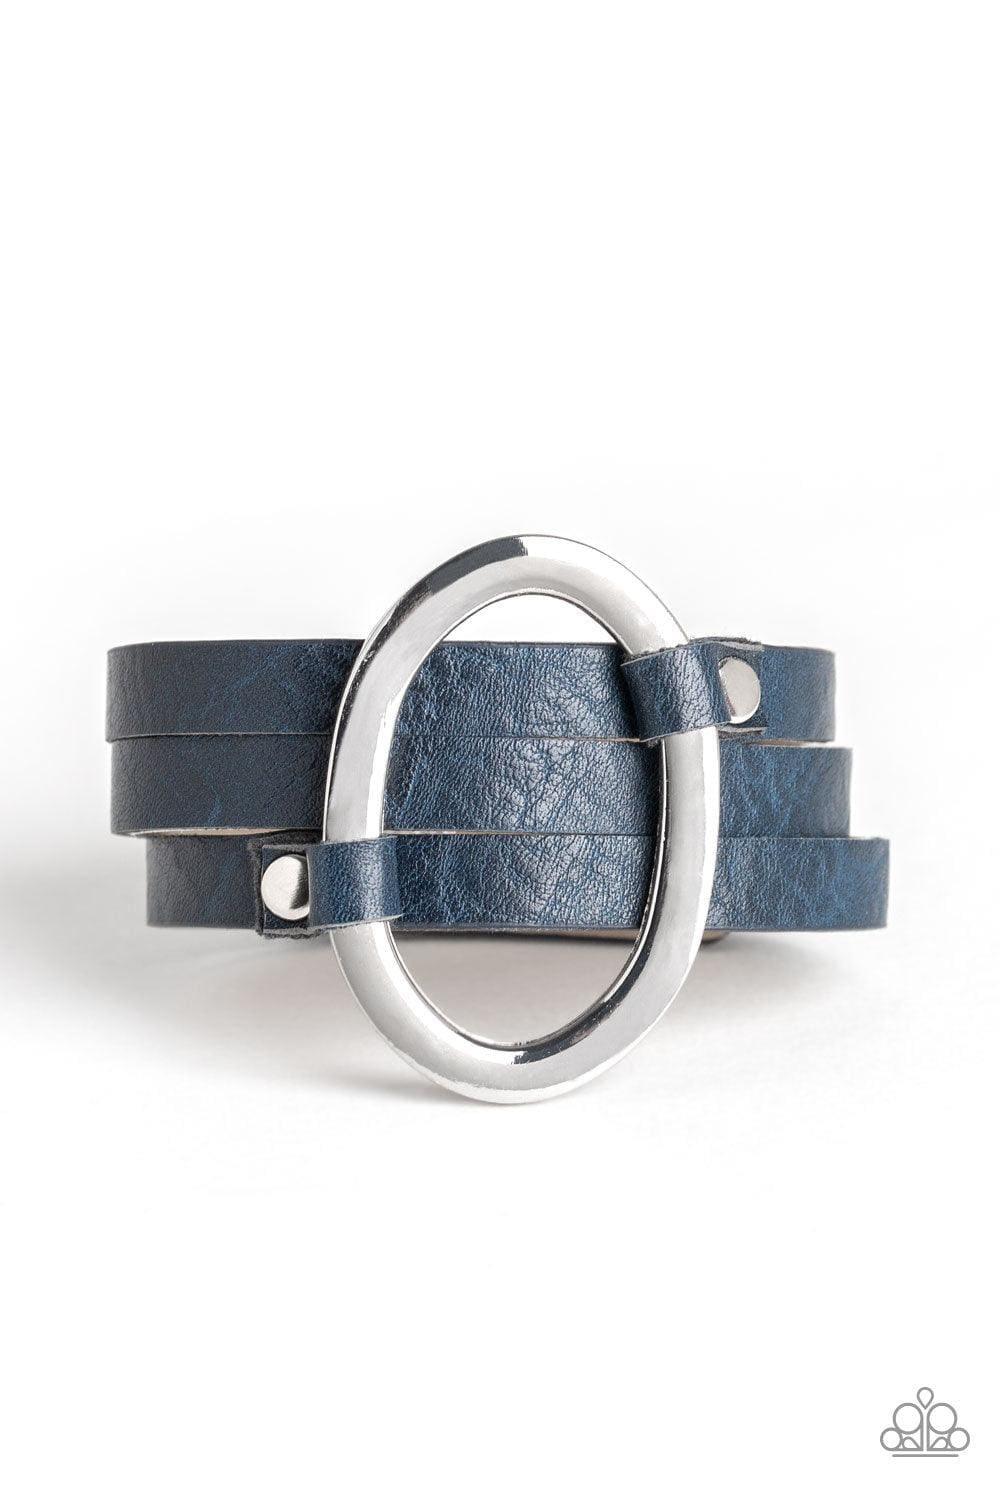 Paparazzi Accessories - Cowgirl Cavalier - Blue Snap Bracelet - Bling by JessieK